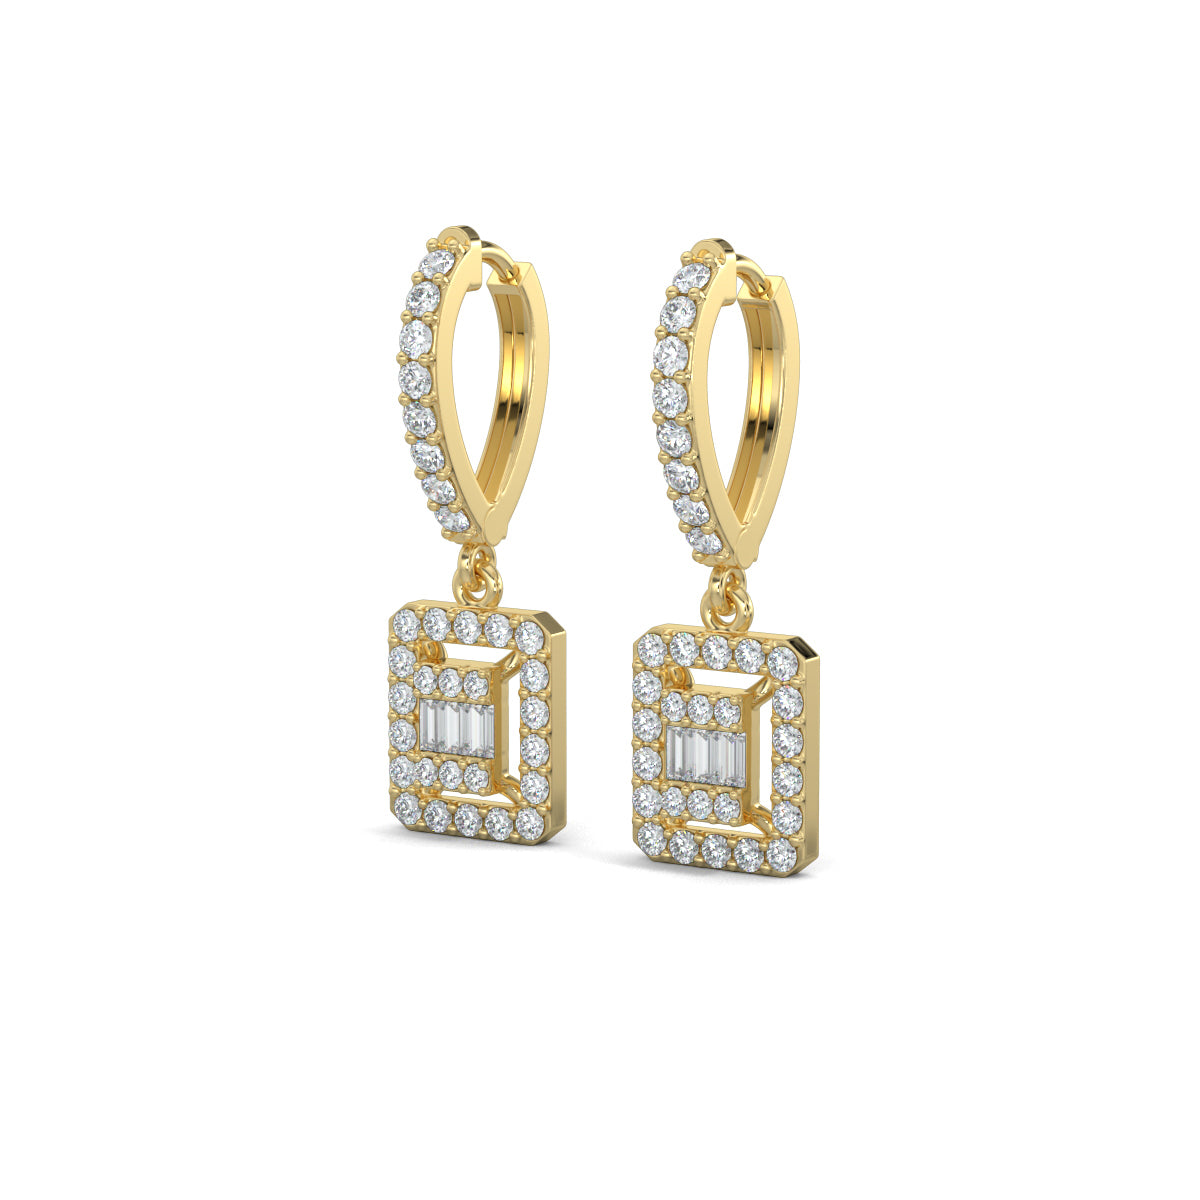 Yellow Gold, Natural diamond earrings, Lab-grown diamond earrings, Elegant Dangler drop Earrings, Pave setting, Halo setting, Modern diamond earrings, Sophisticated jewelry, Diamond drop earrings, Graceful dangler earrings.